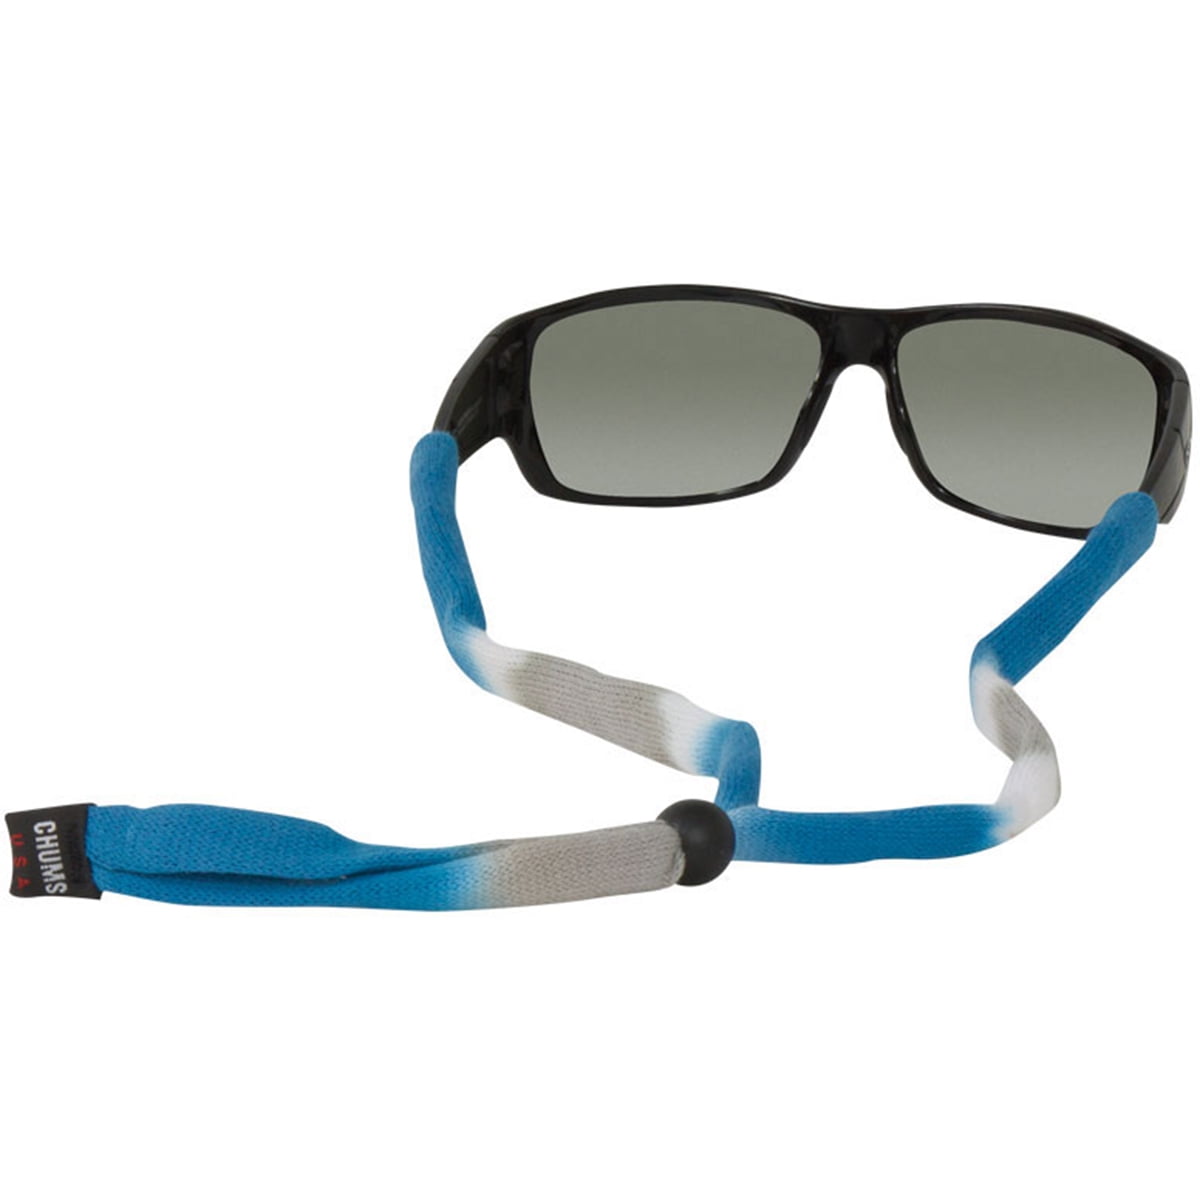 Chums Original Adjustable Camo Cotton & Neoprene Sunglasses Eyewear Retainer